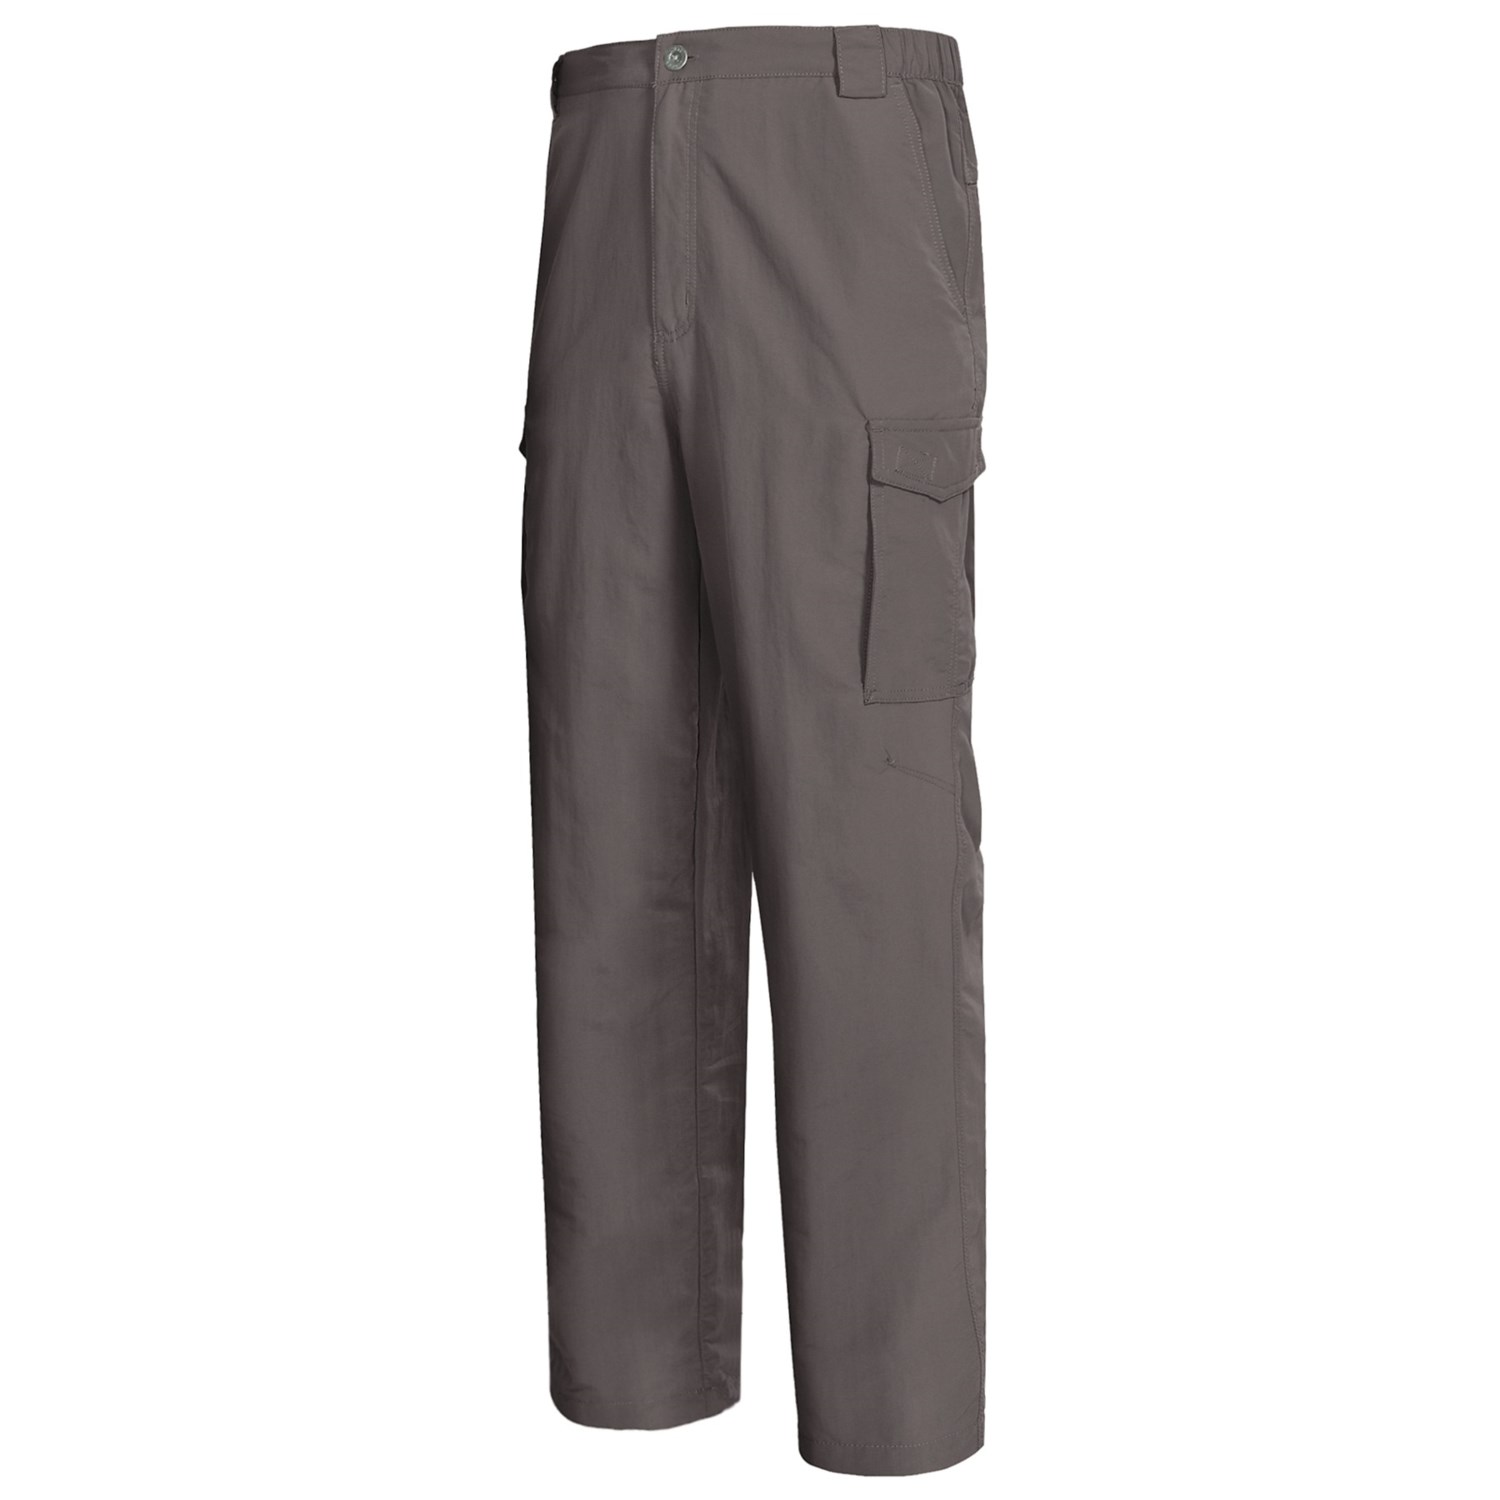 White Sierra Rocky Ridge Pants - UPF 30 (For Men) - Save 30%